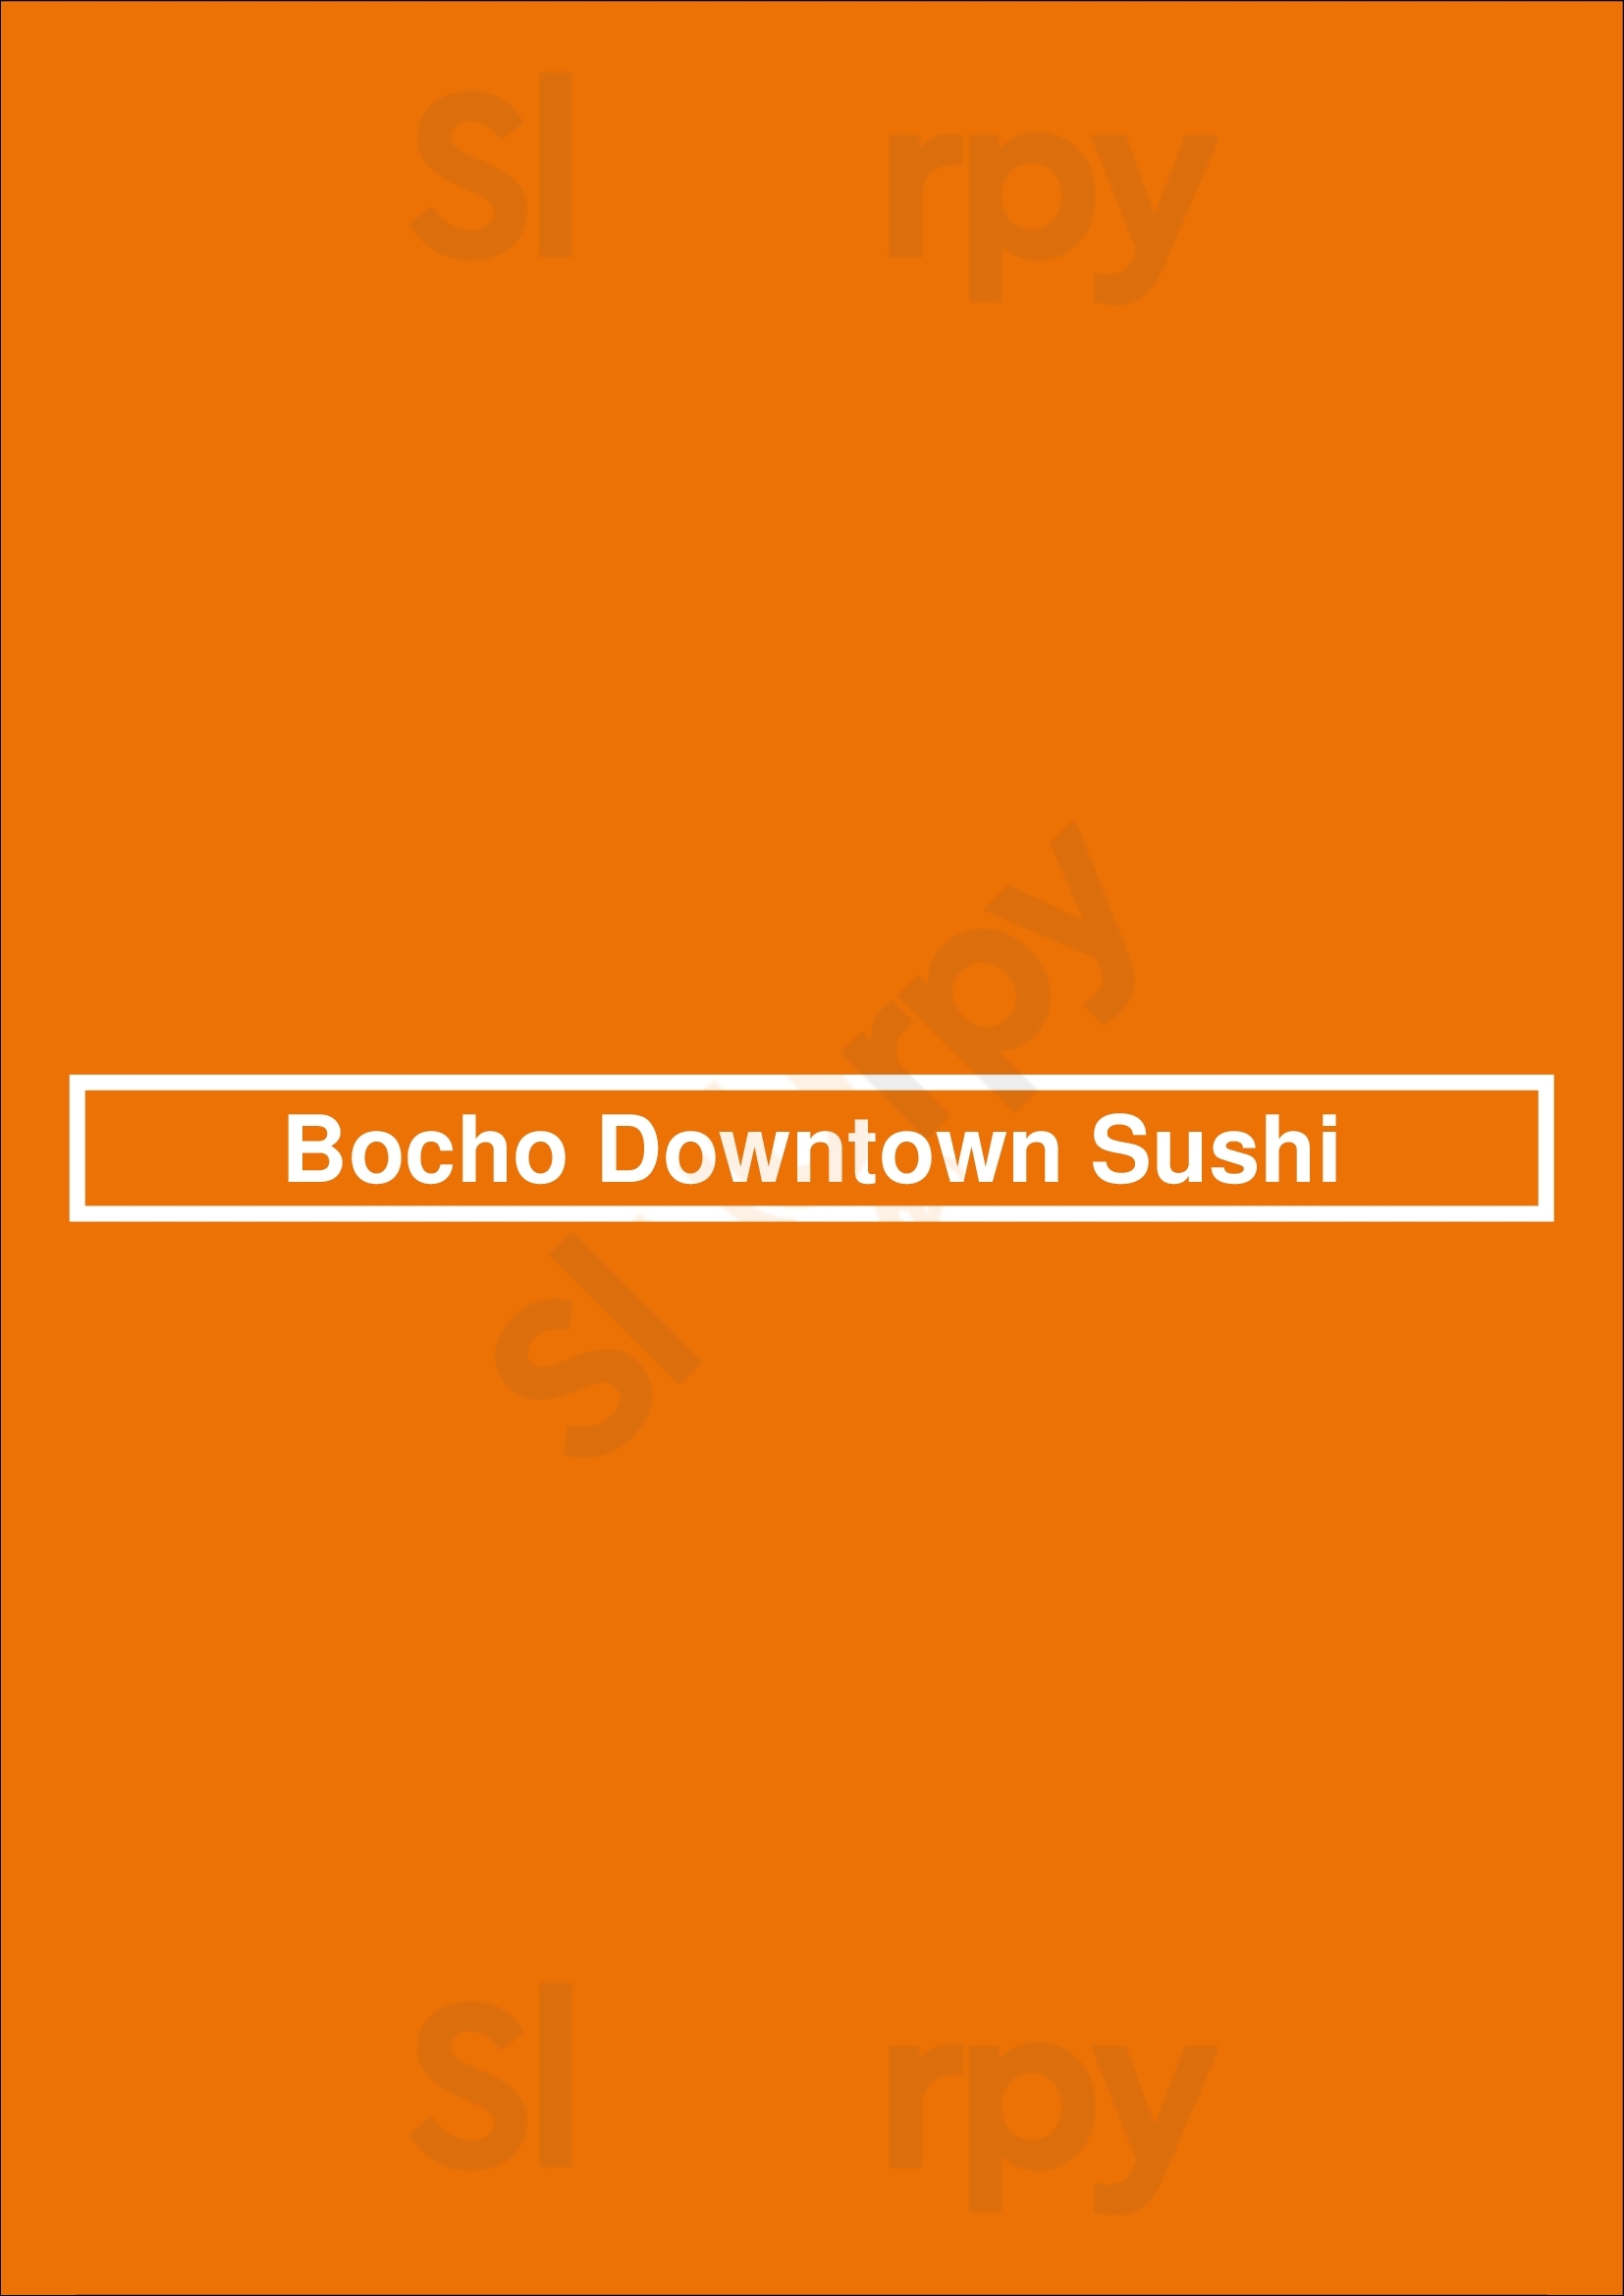 Bocho Downtown Sushi Las Vegas Menu - 1